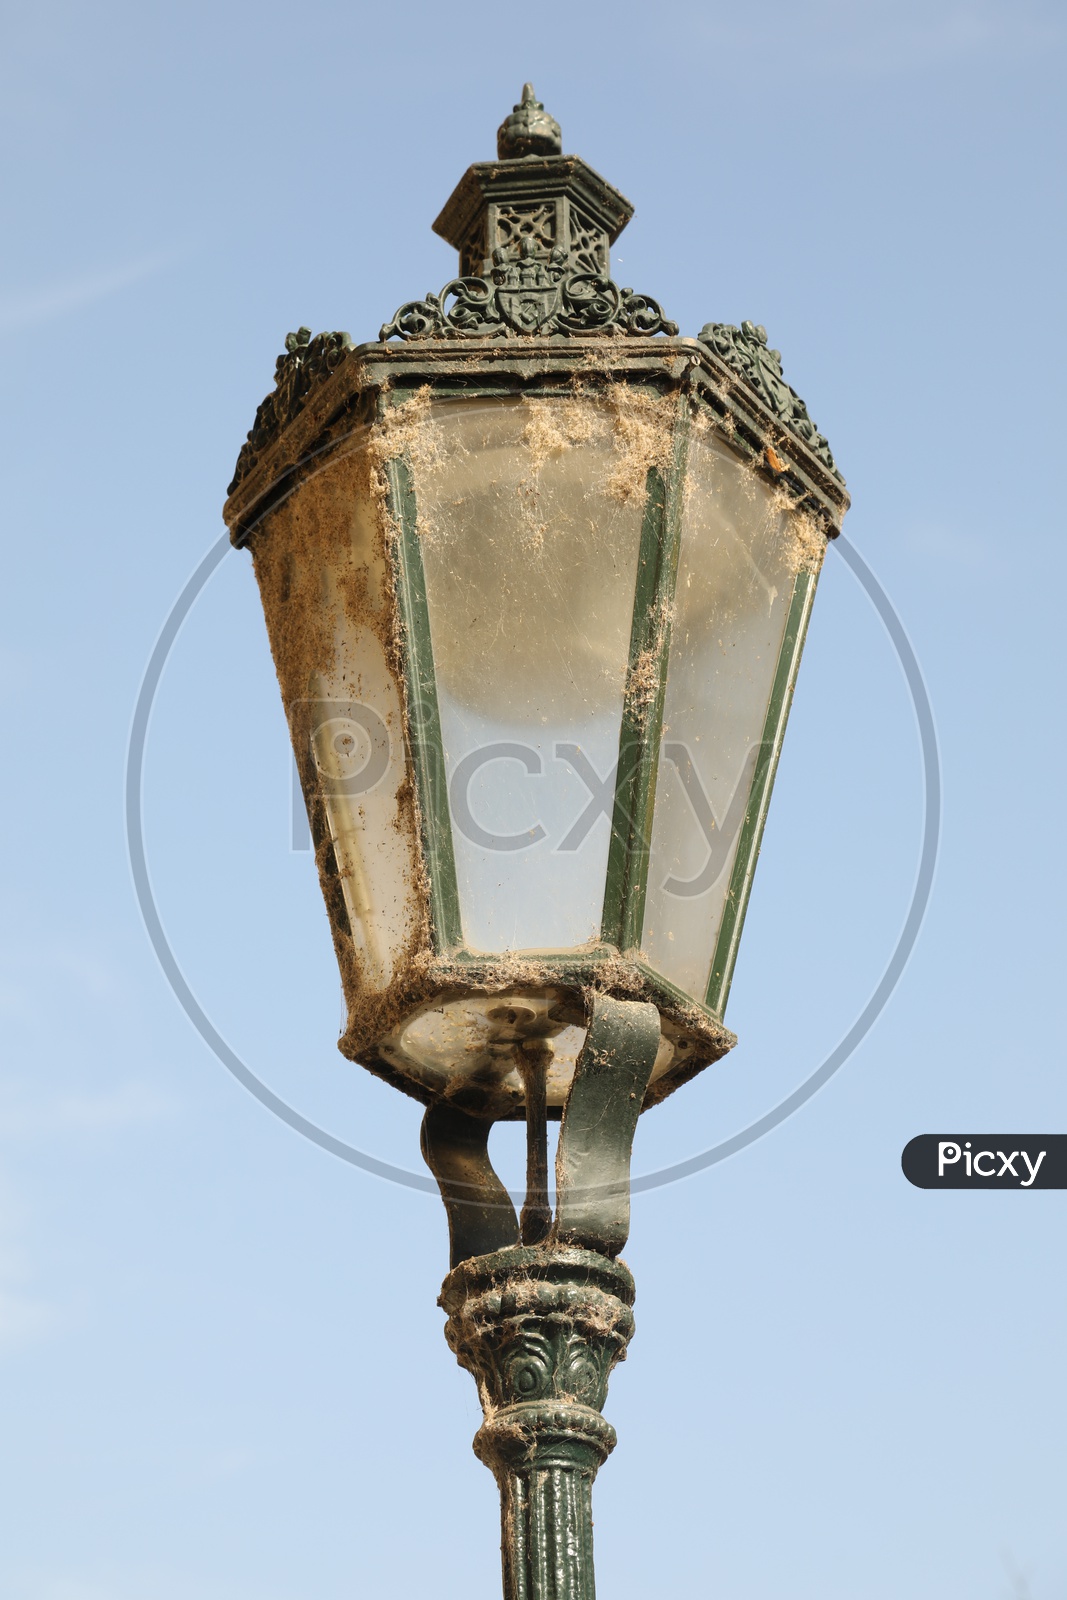 Street Light / Lamps Posts